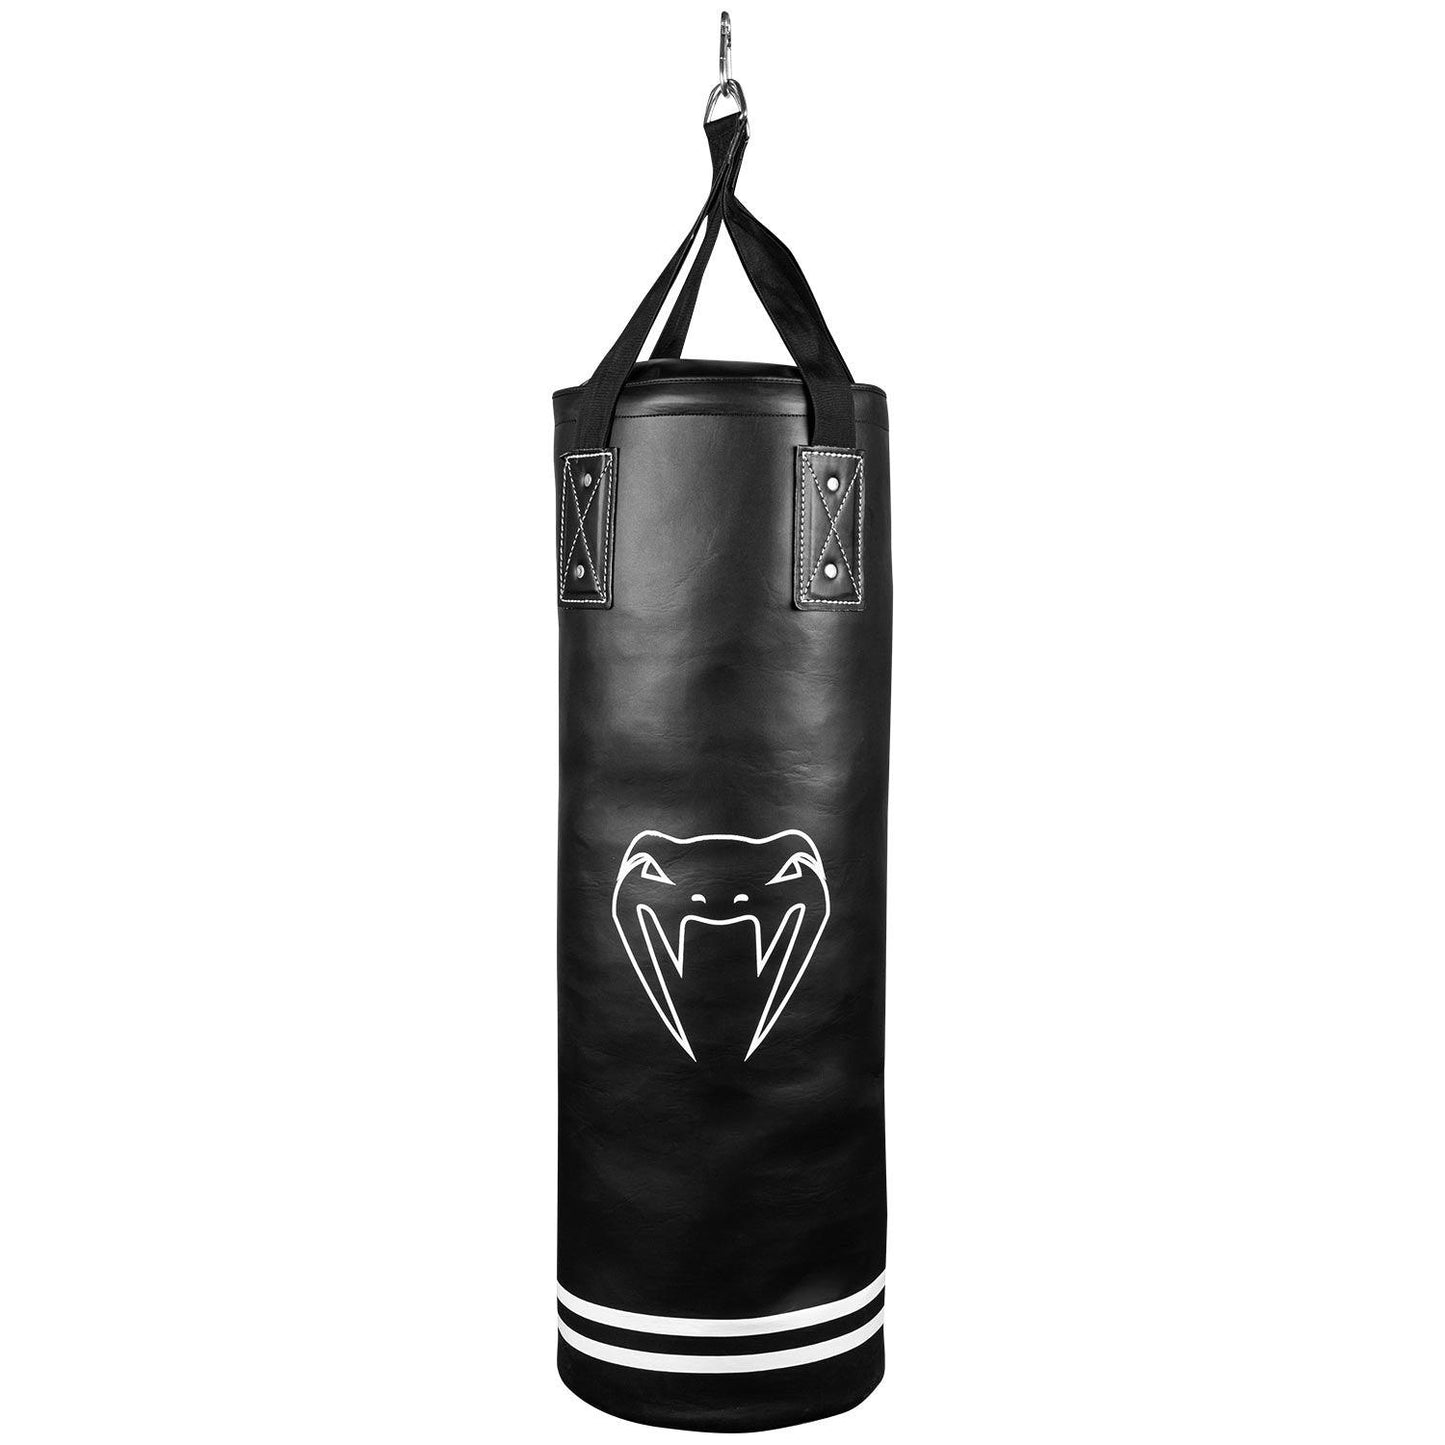 Venum Classic Heavy Boxing Bag Kit - 70lbs - WLMT Edition